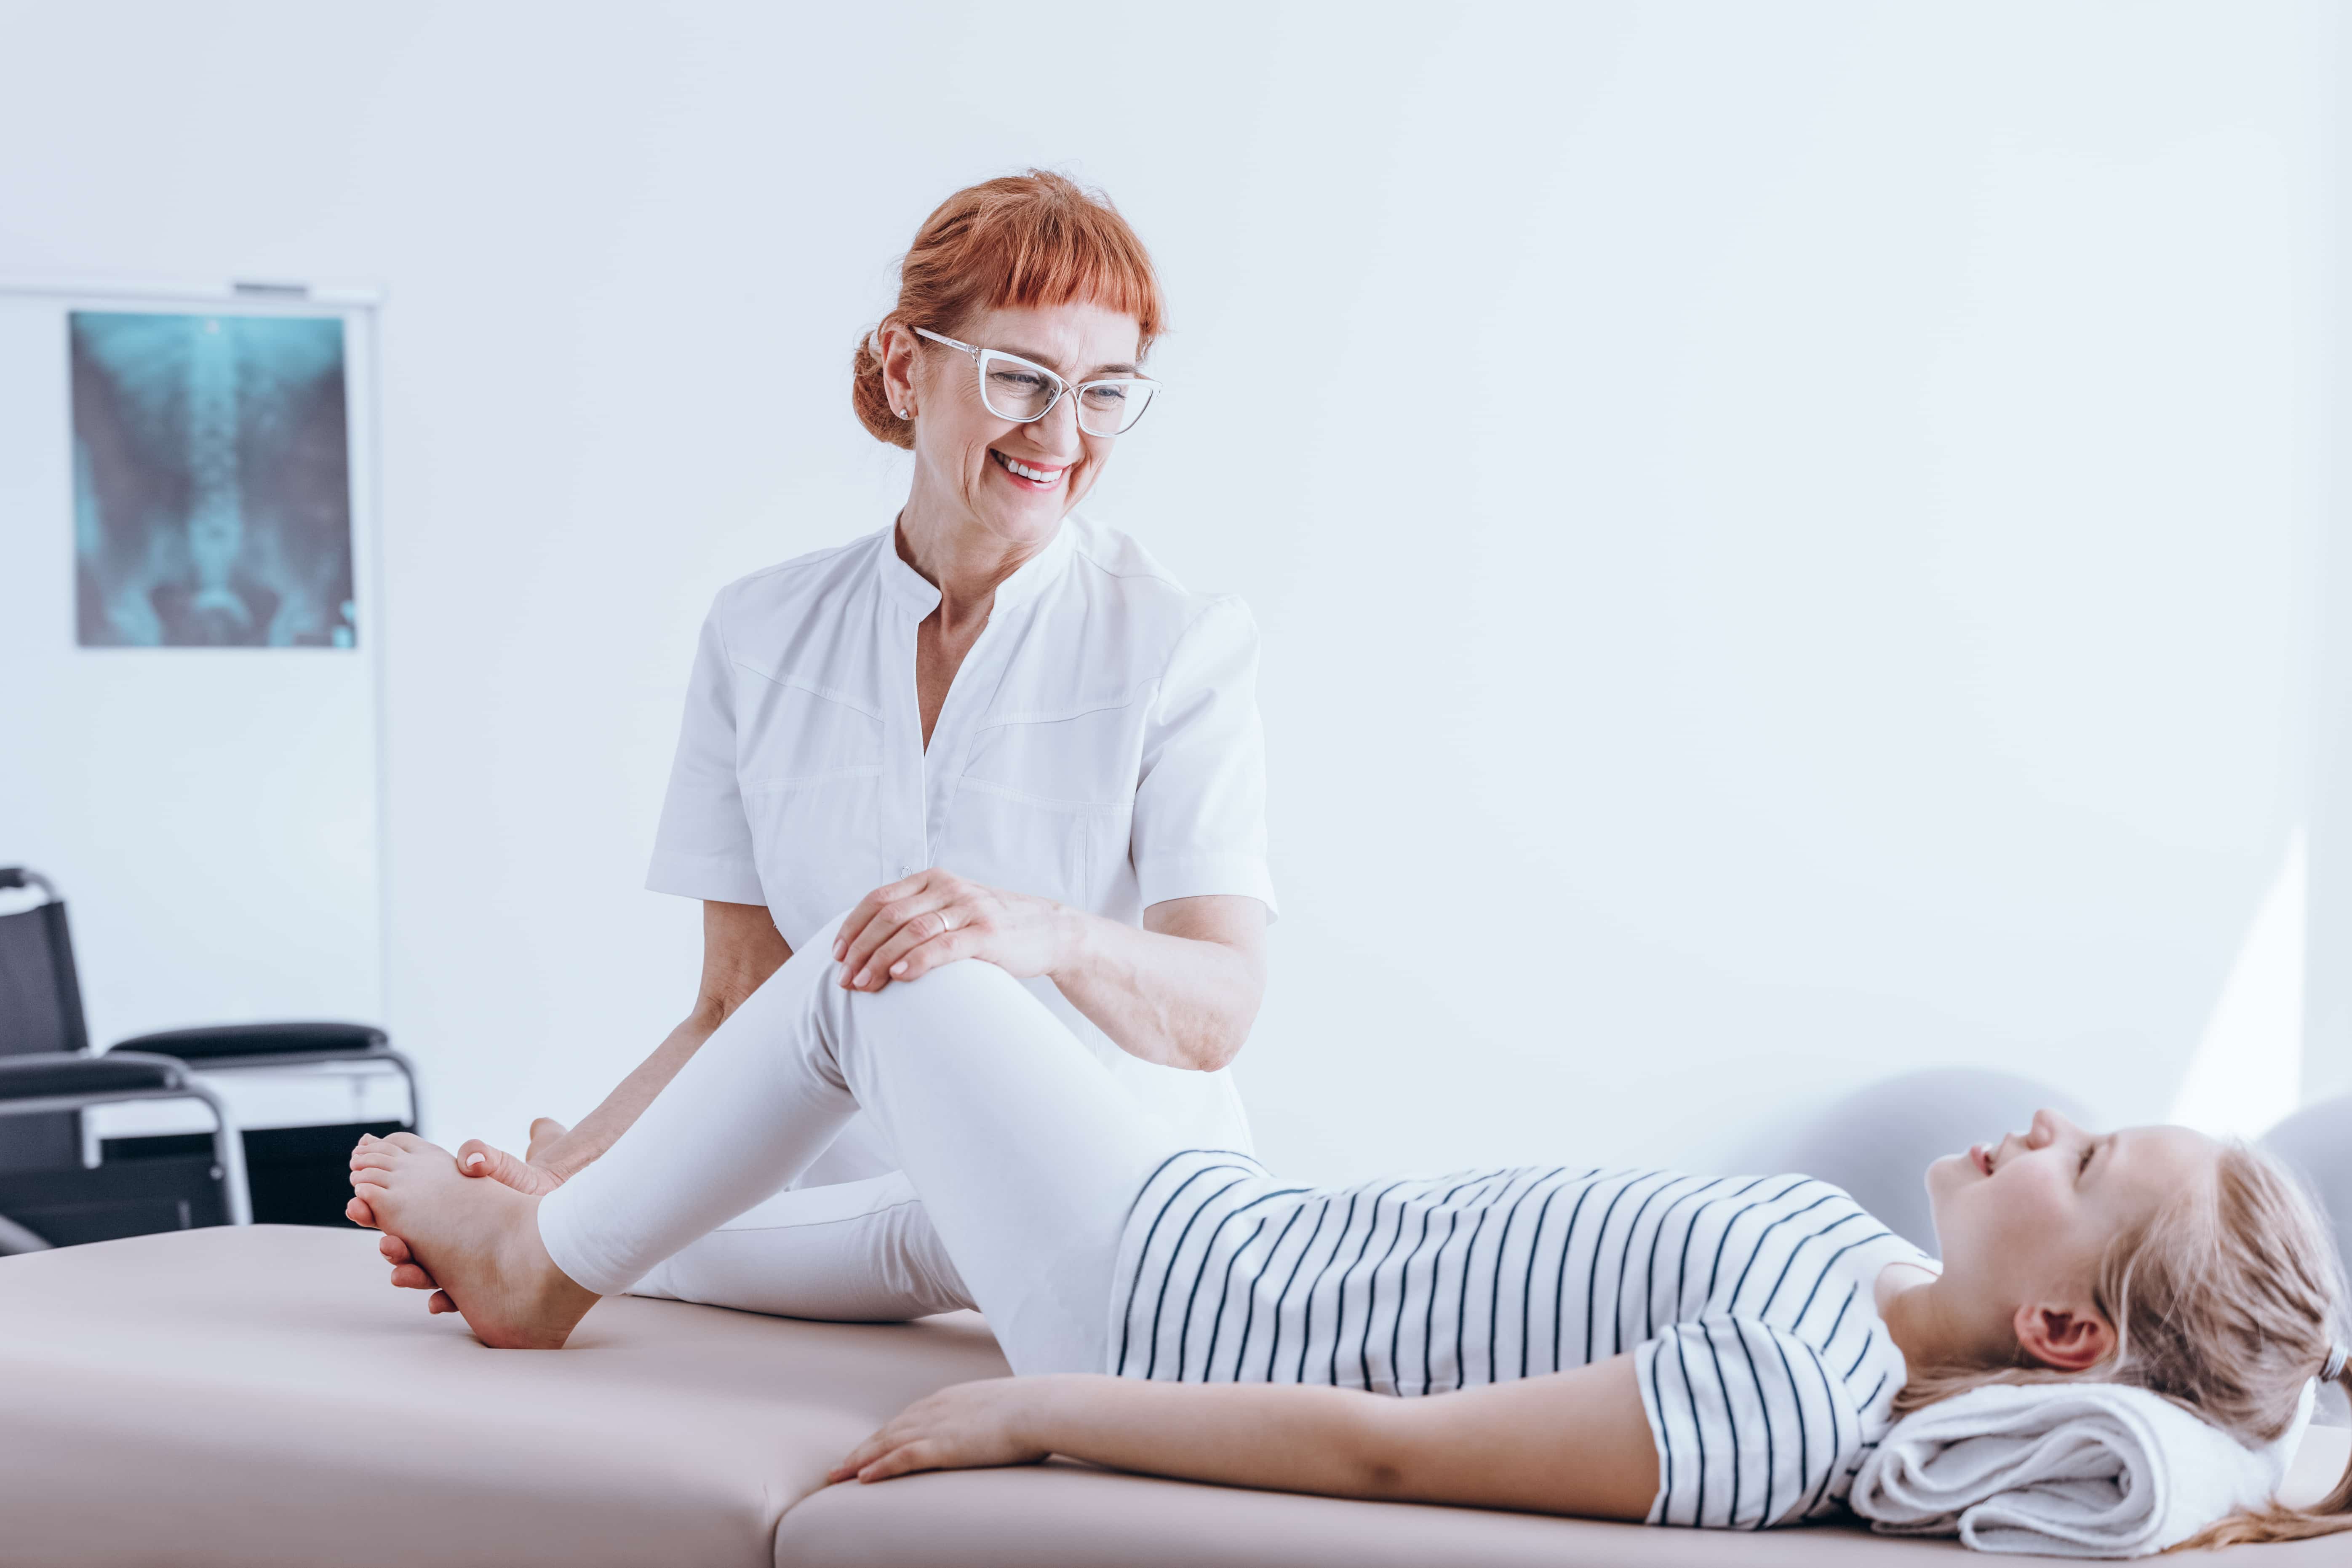 Physiotherapy & Rehabilitation